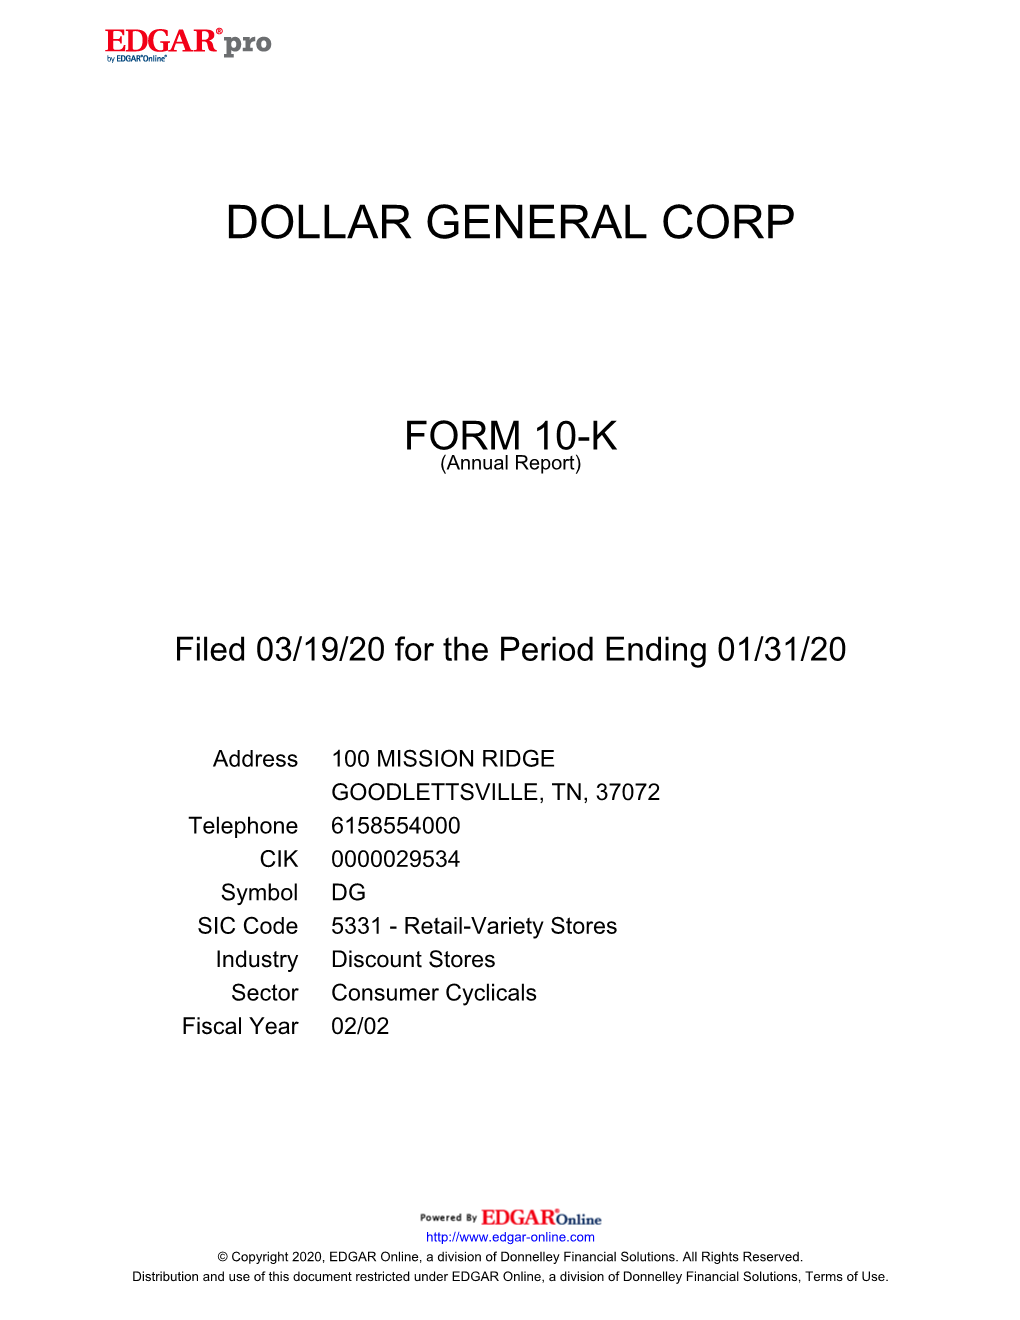 Dollar General Corp